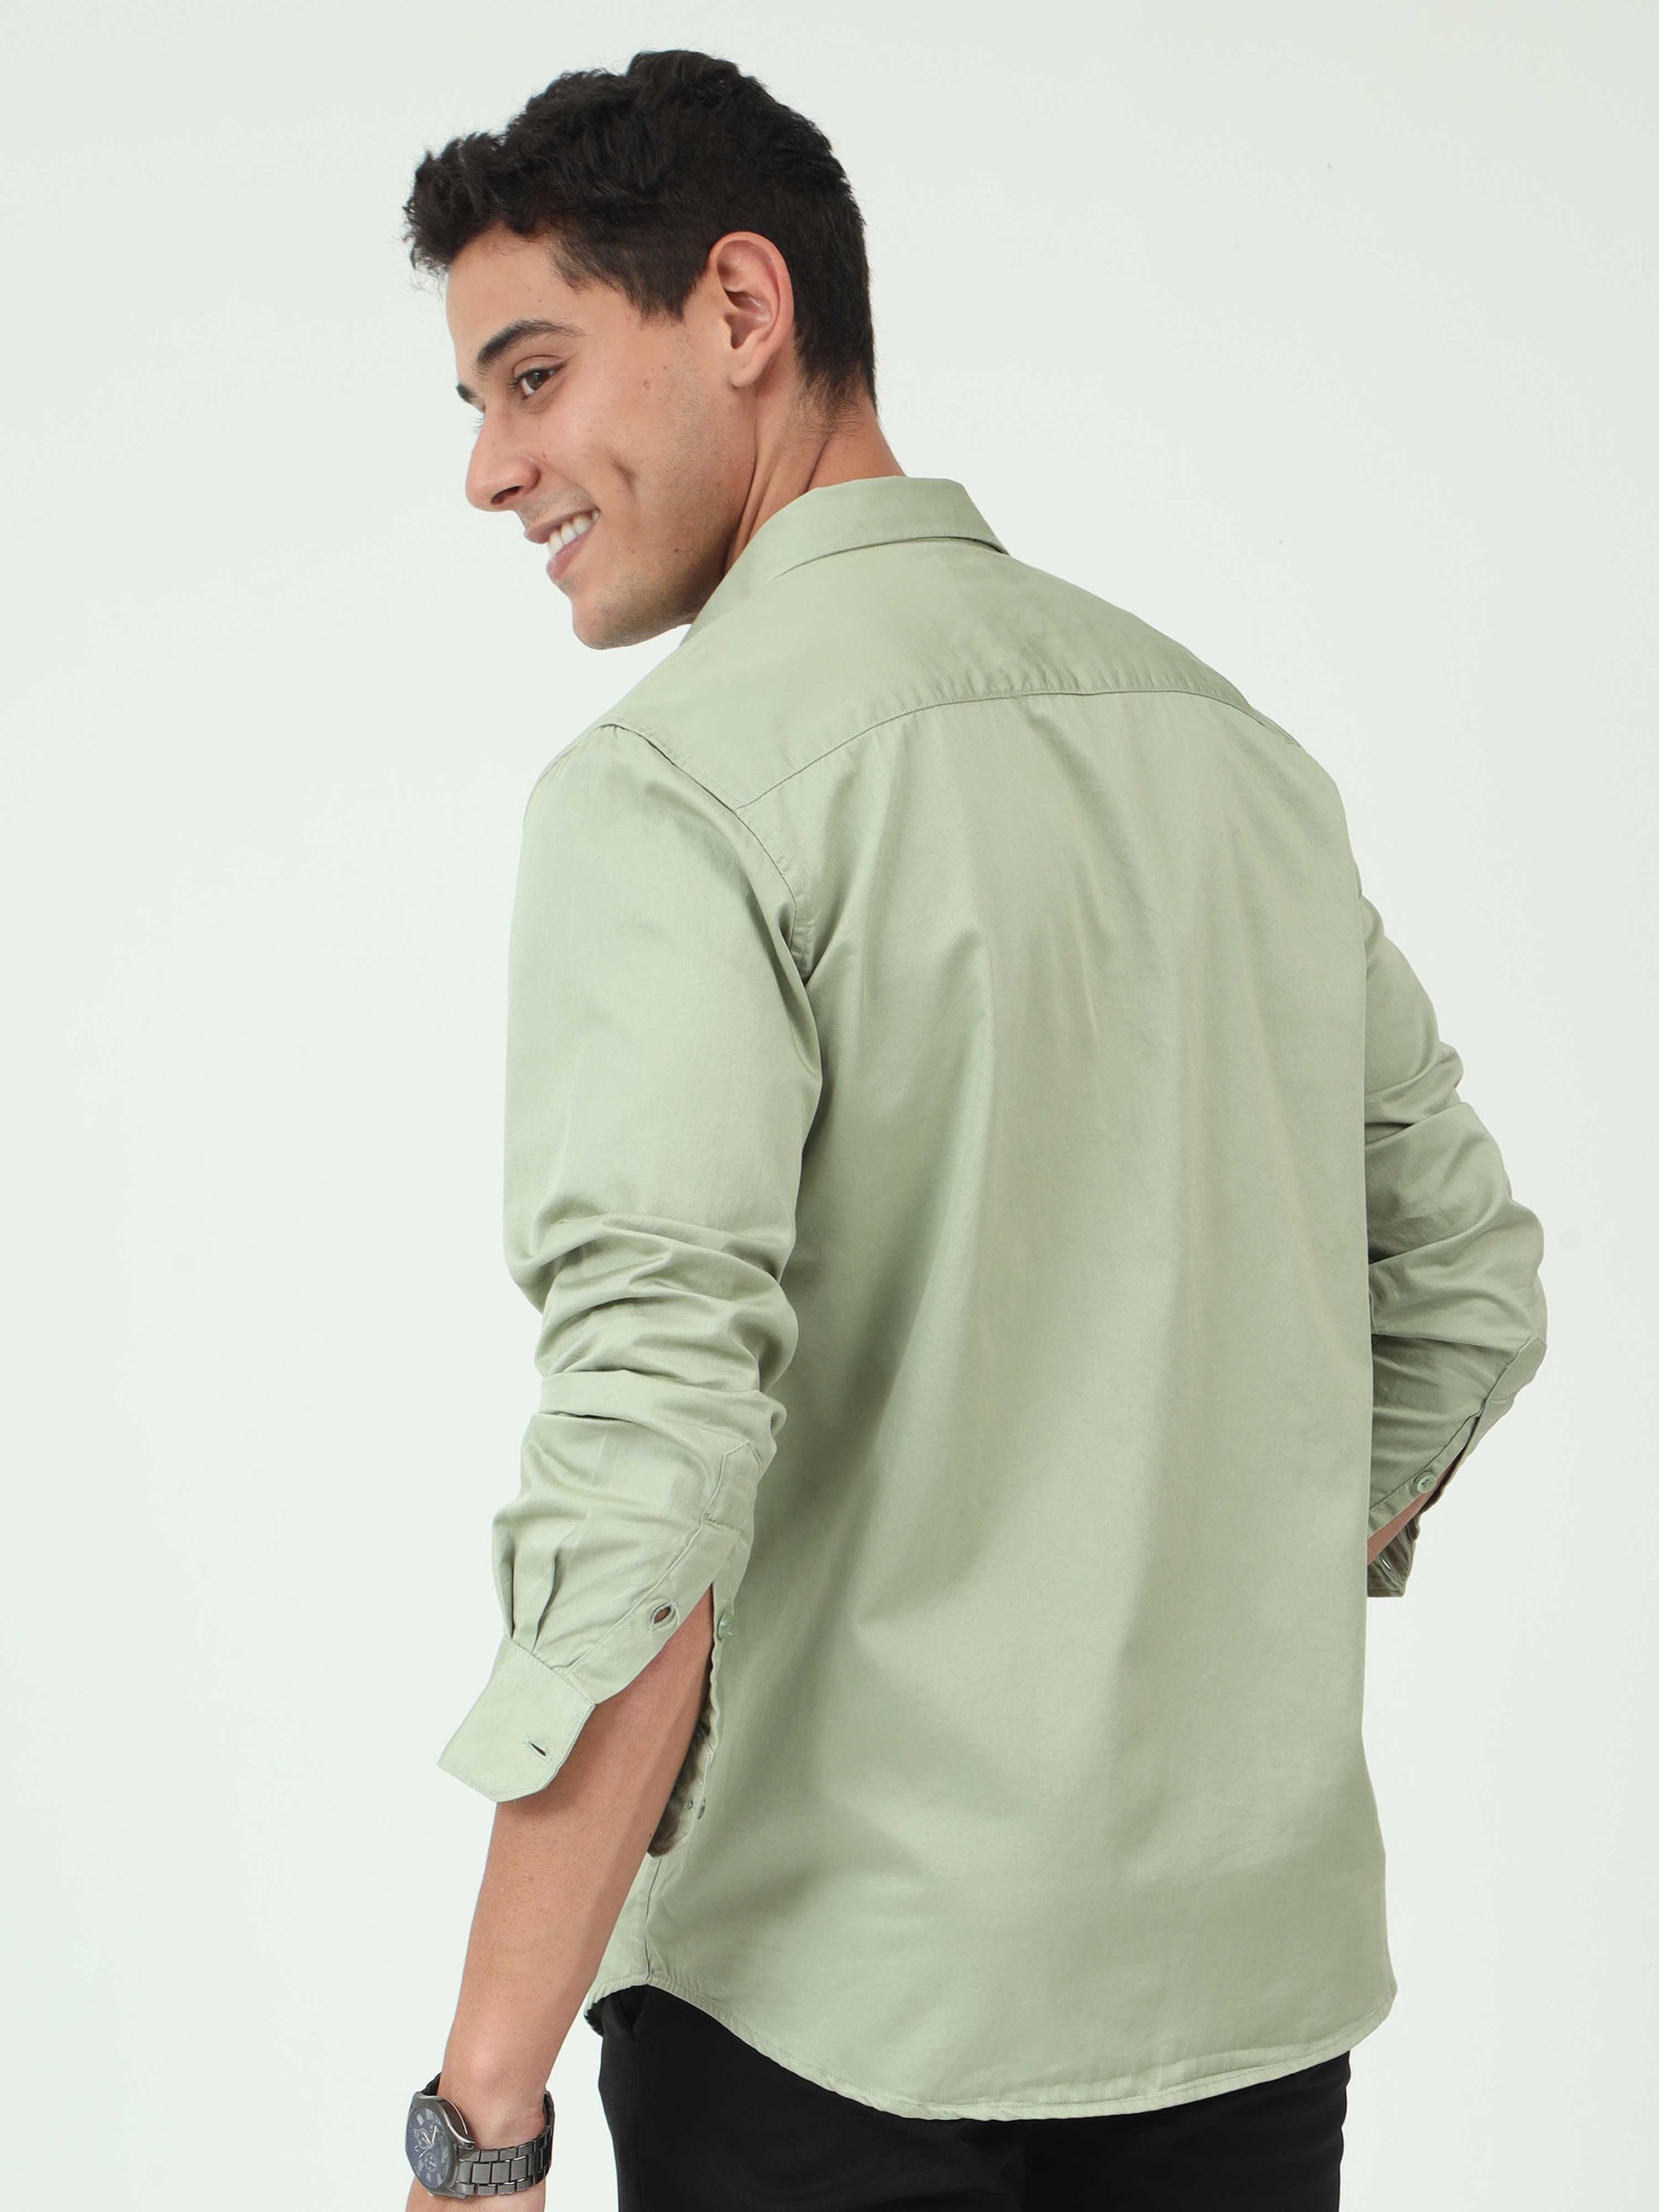 One-tone Pista Green Satin shirt for Men